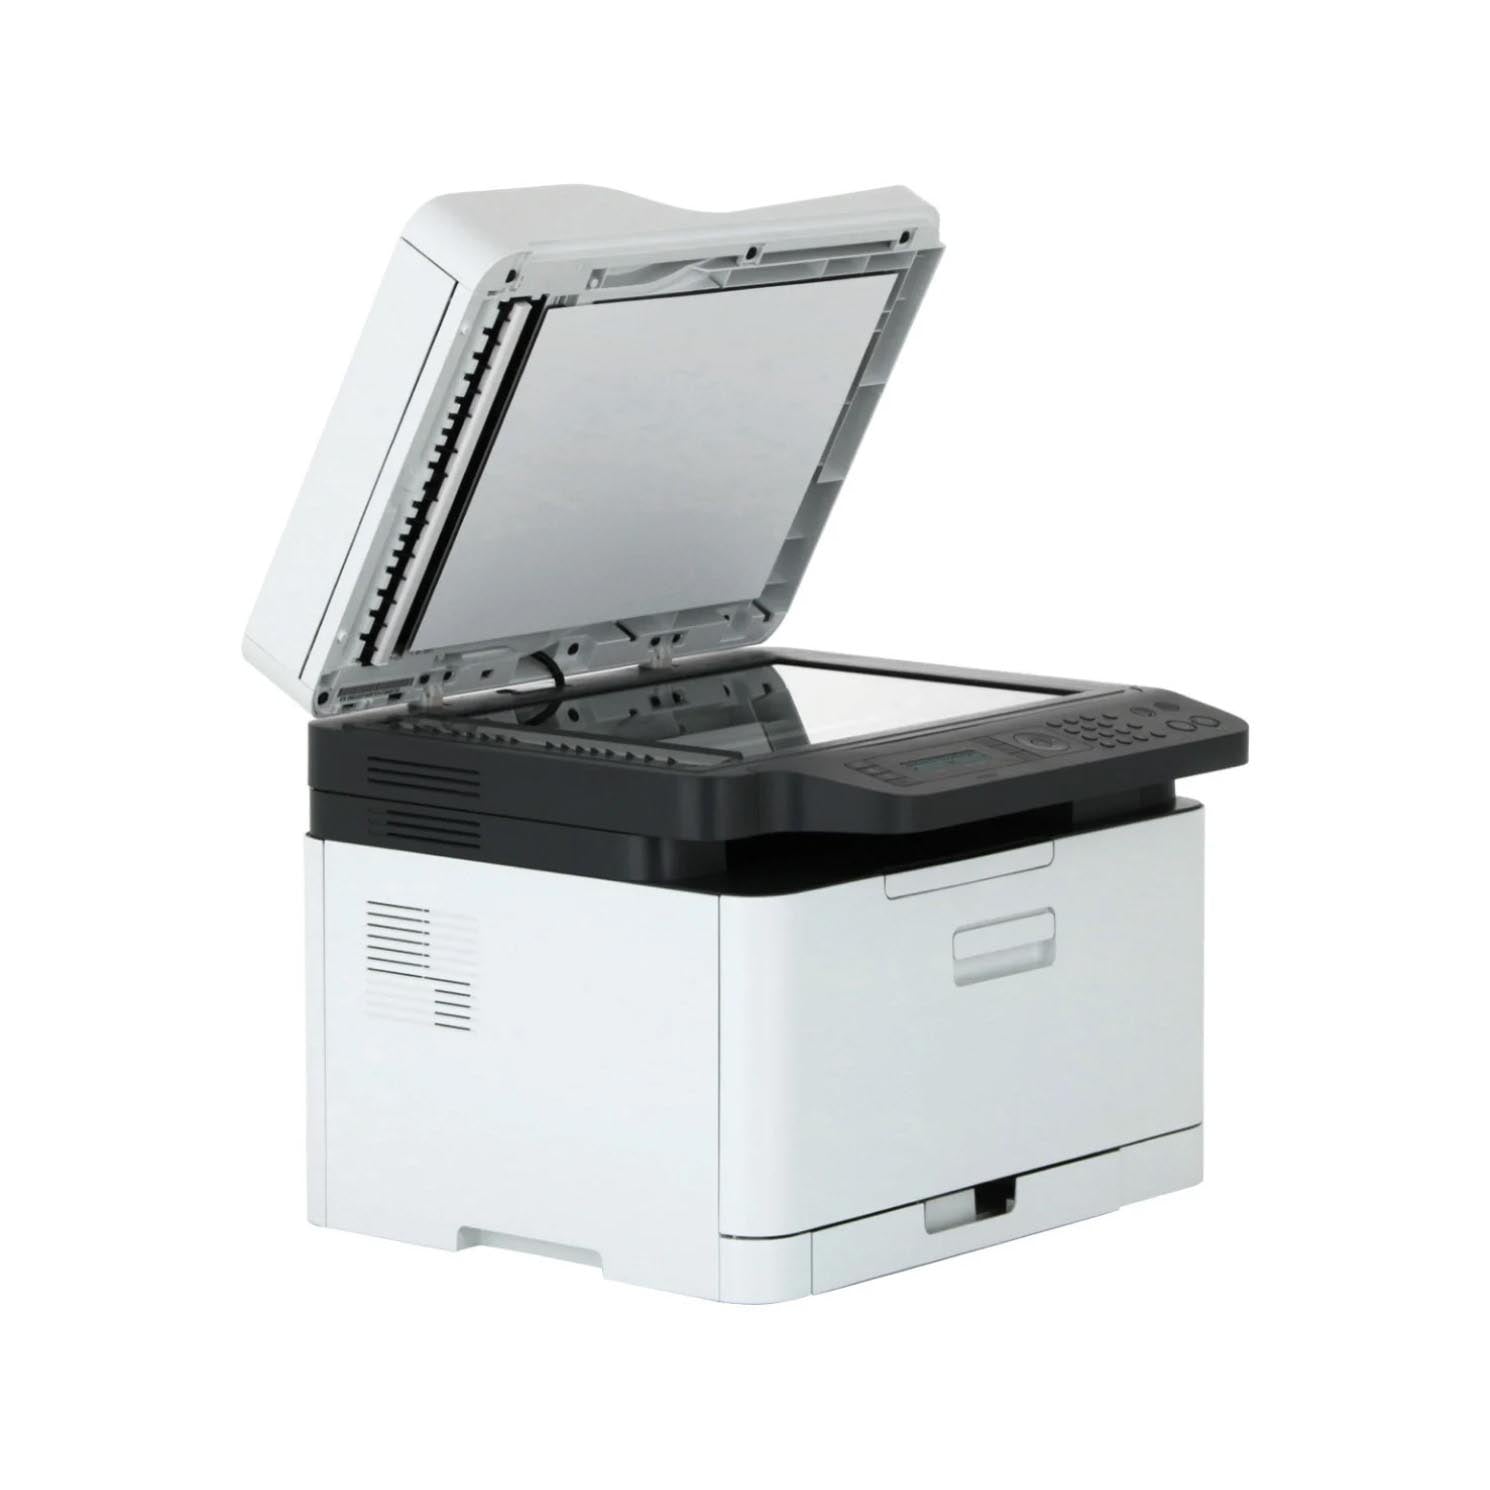 PrintPro All-In-One Printer